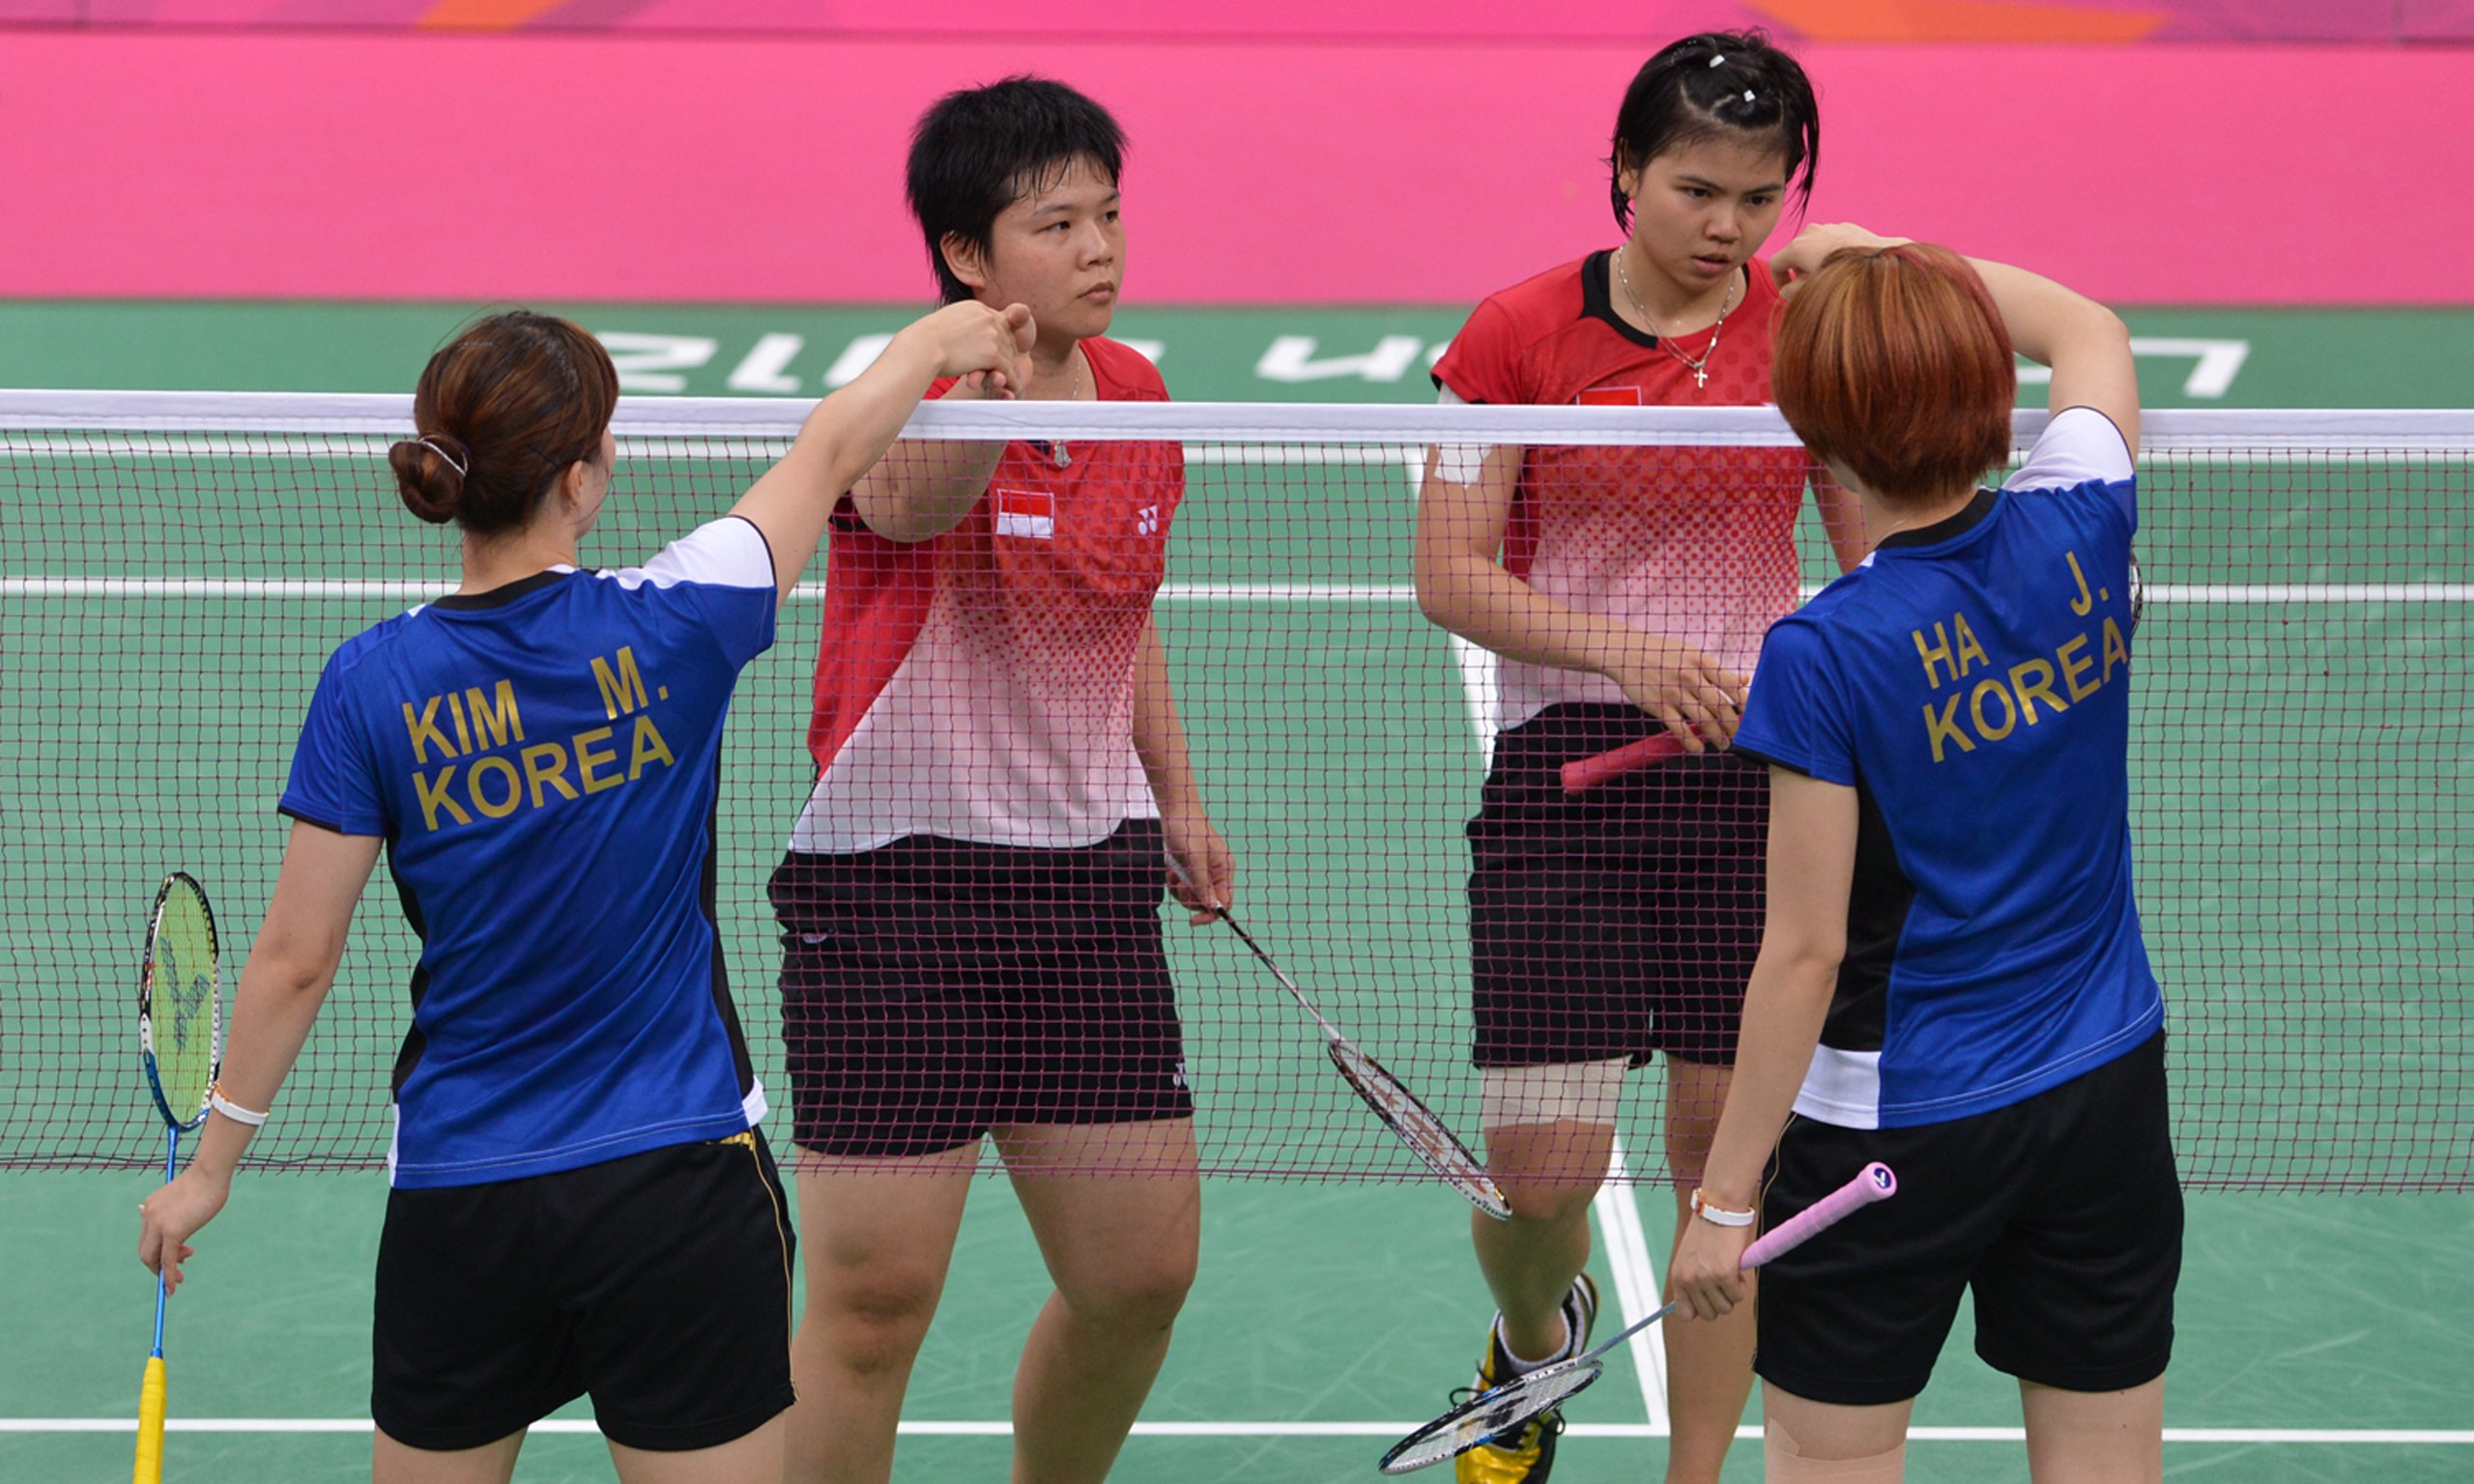 Spiele verschoben - Vier Badminton-Damendoppel ausgeschlossen